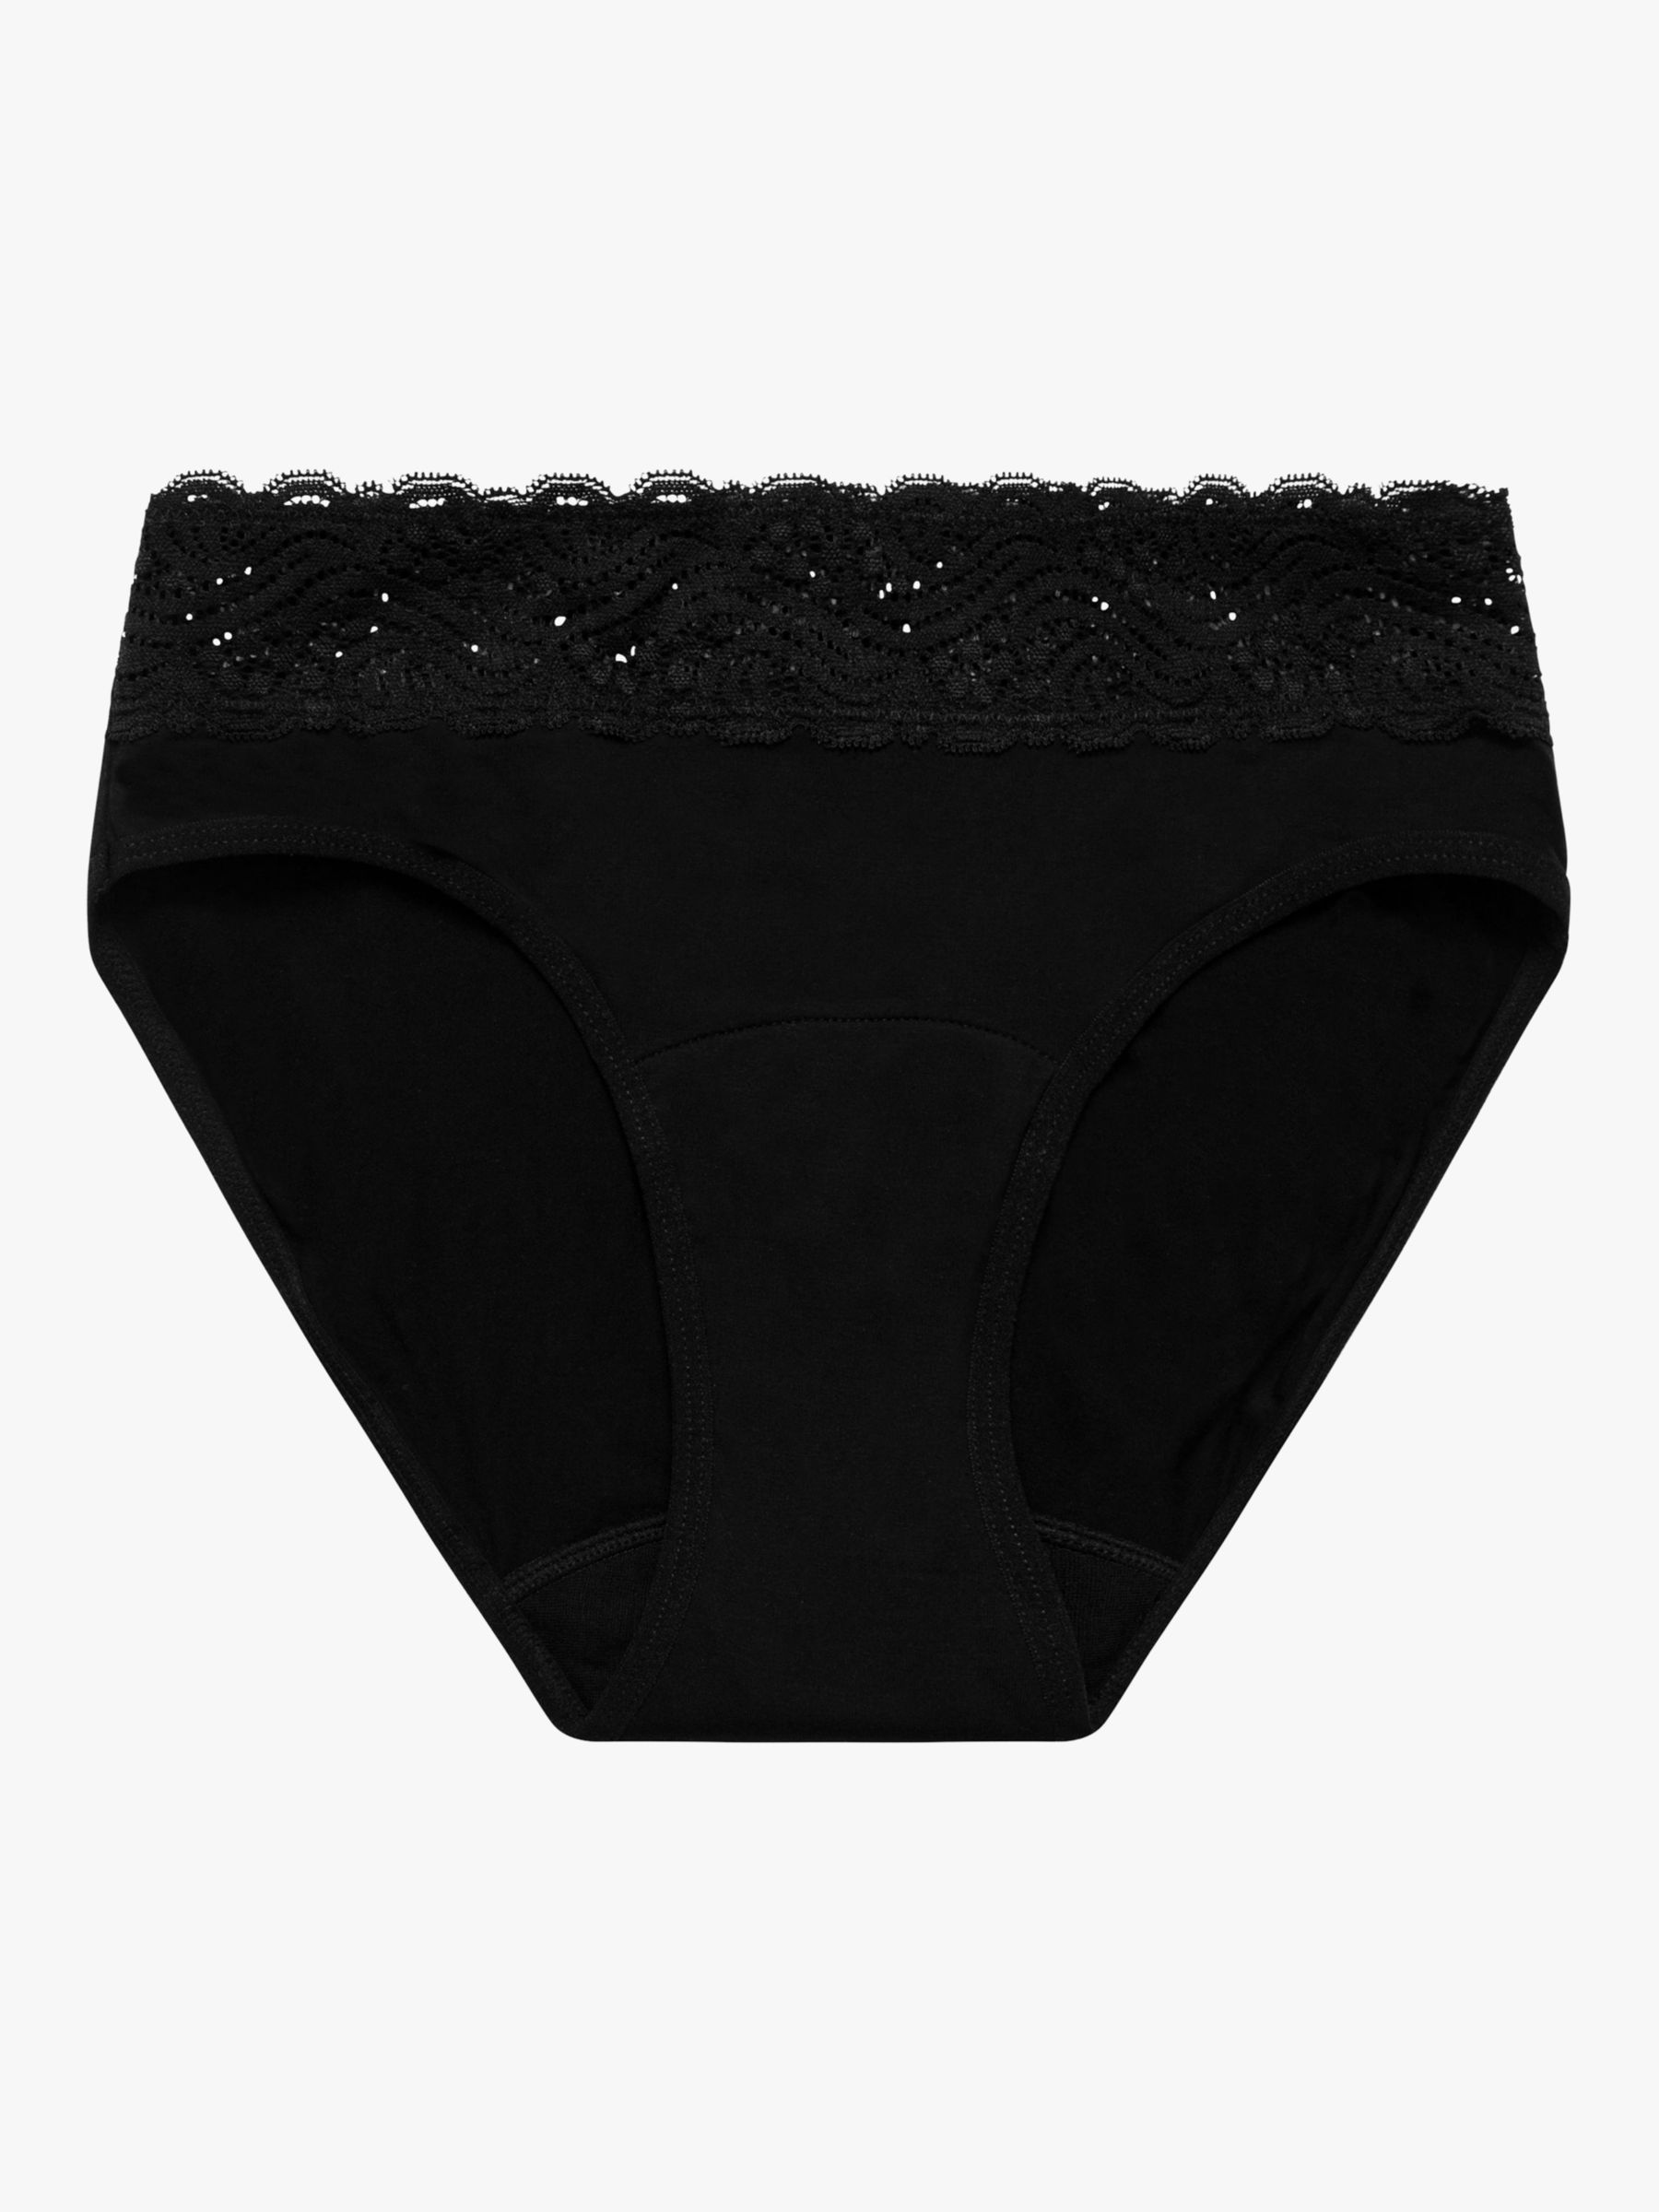 Modibodi Sensual High Waist Bikini Light to Moderate Absorbency Knickers, Black, 8